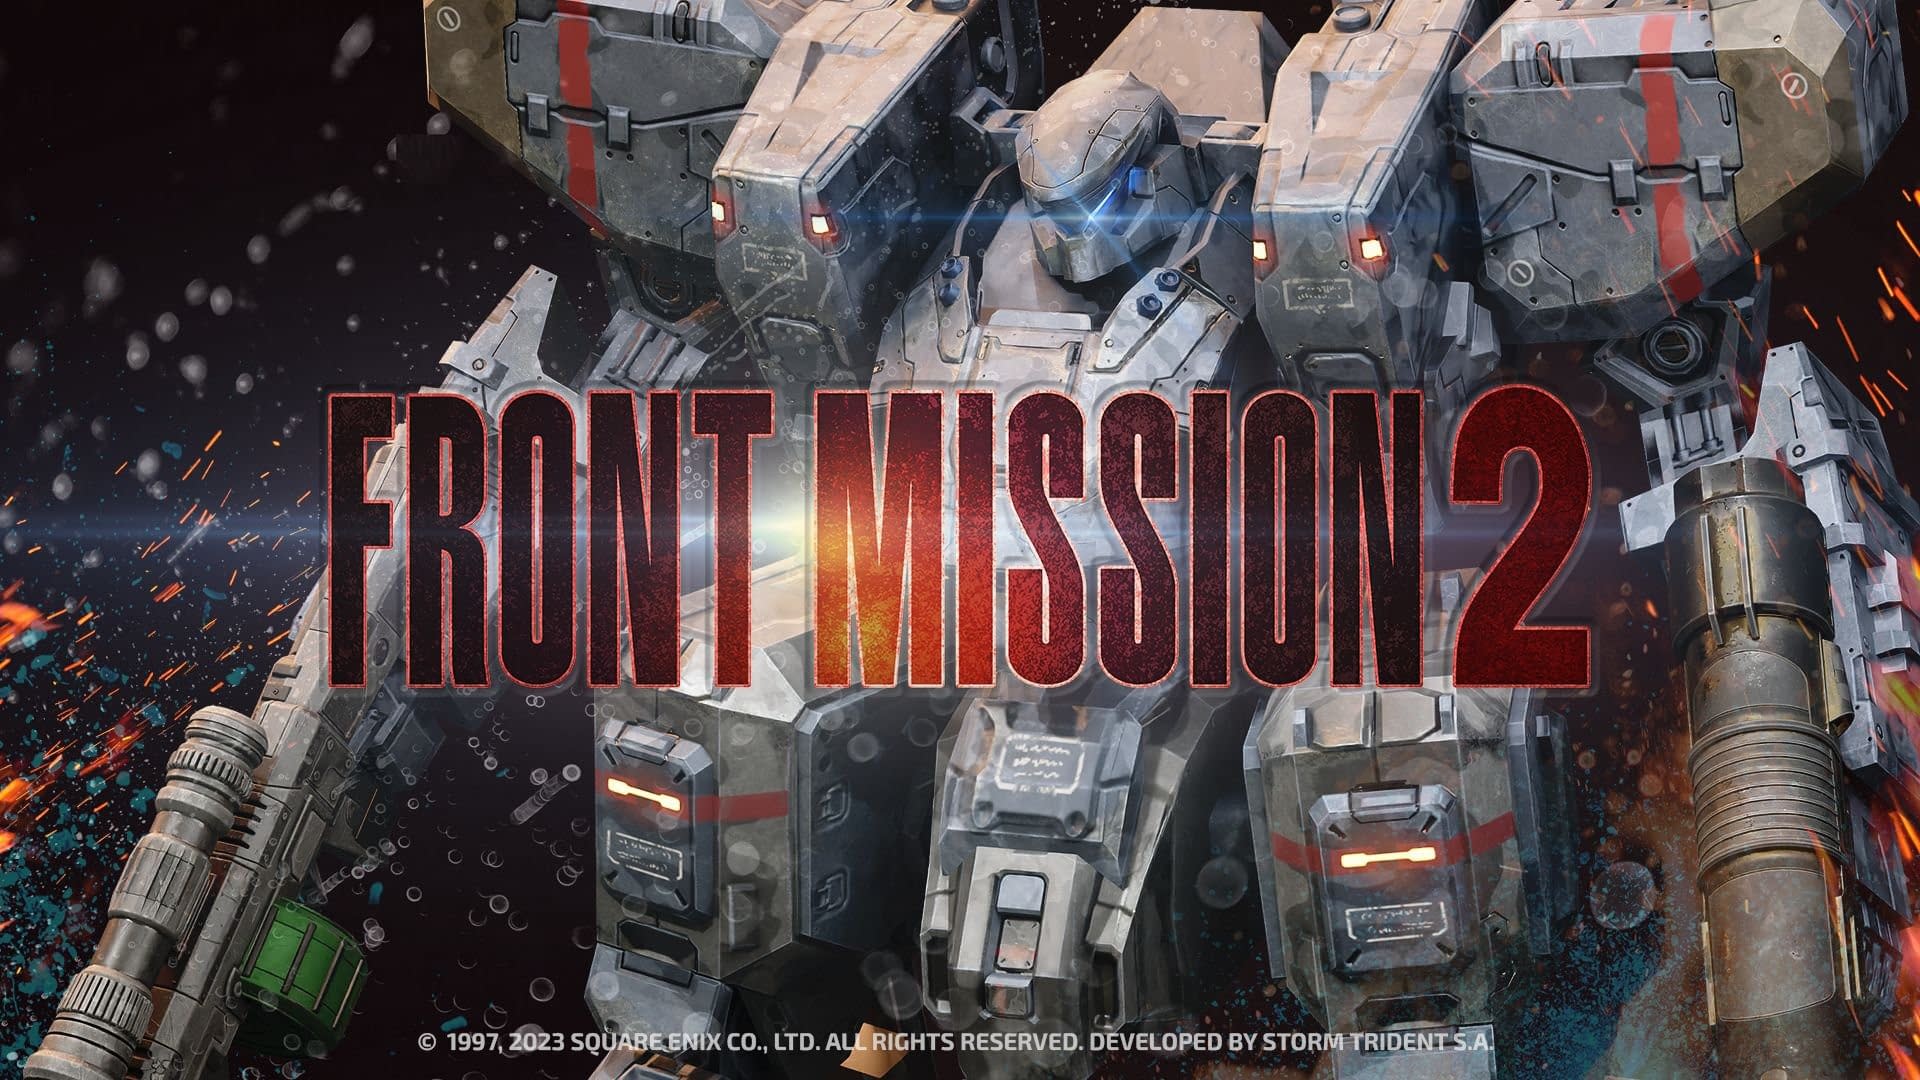 FRONT MISSION 2: Story trailer for Remake published